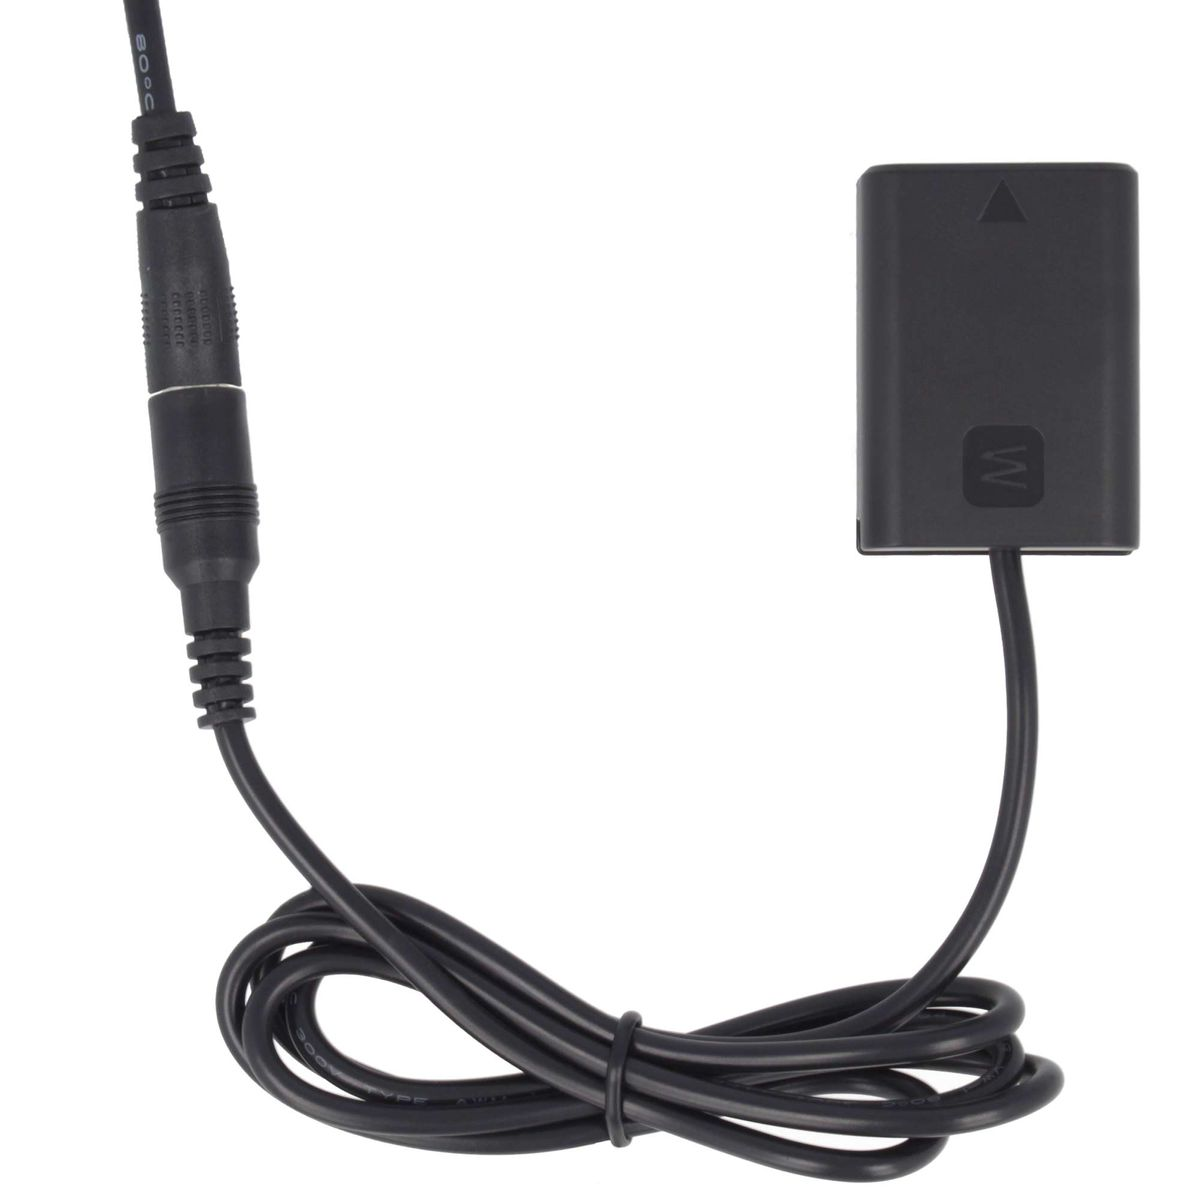 AKKU-KING + Sony AC-PW20 Sony, Angabe USB-C keine Ladegerät Kuppler kompatibel Adapter mit